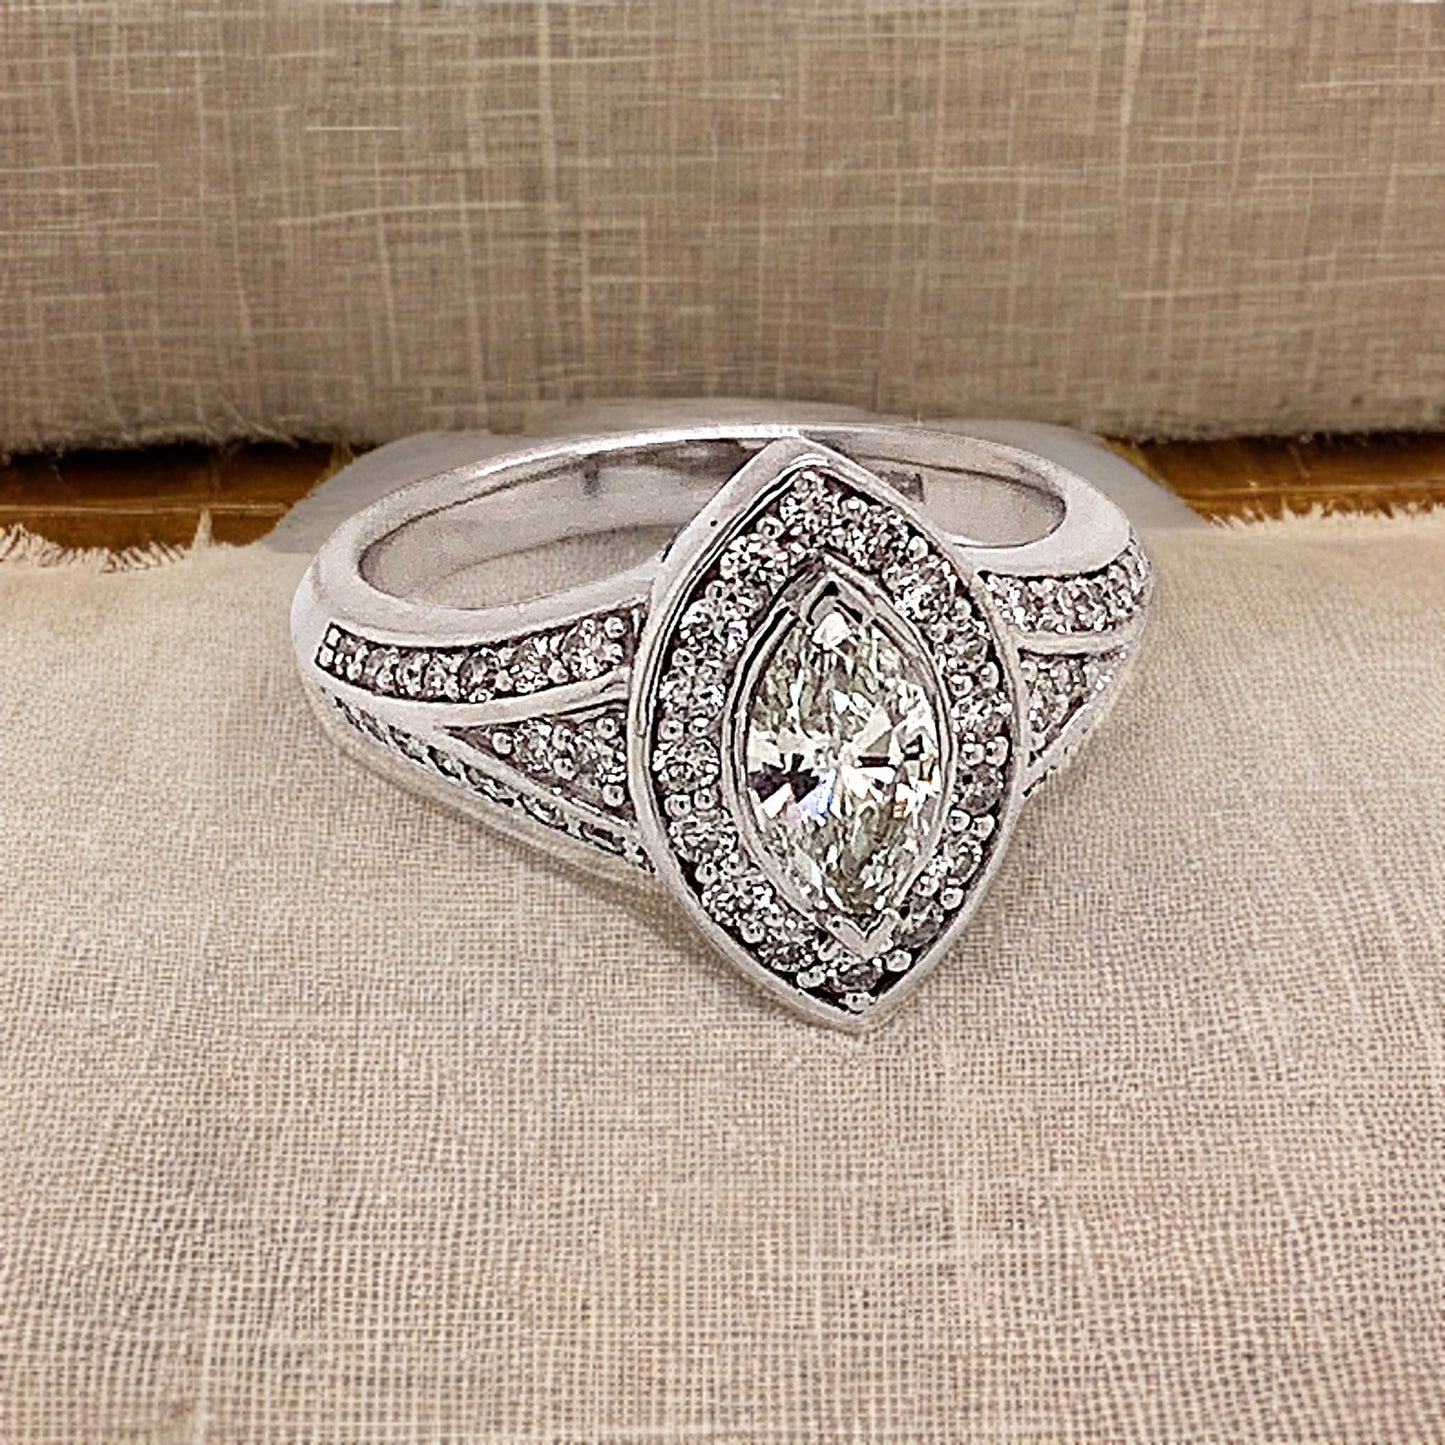 Diamond Ring Size 6.5 14k White Gold 0.45 TCW 4.88g Certified $5,950 120603